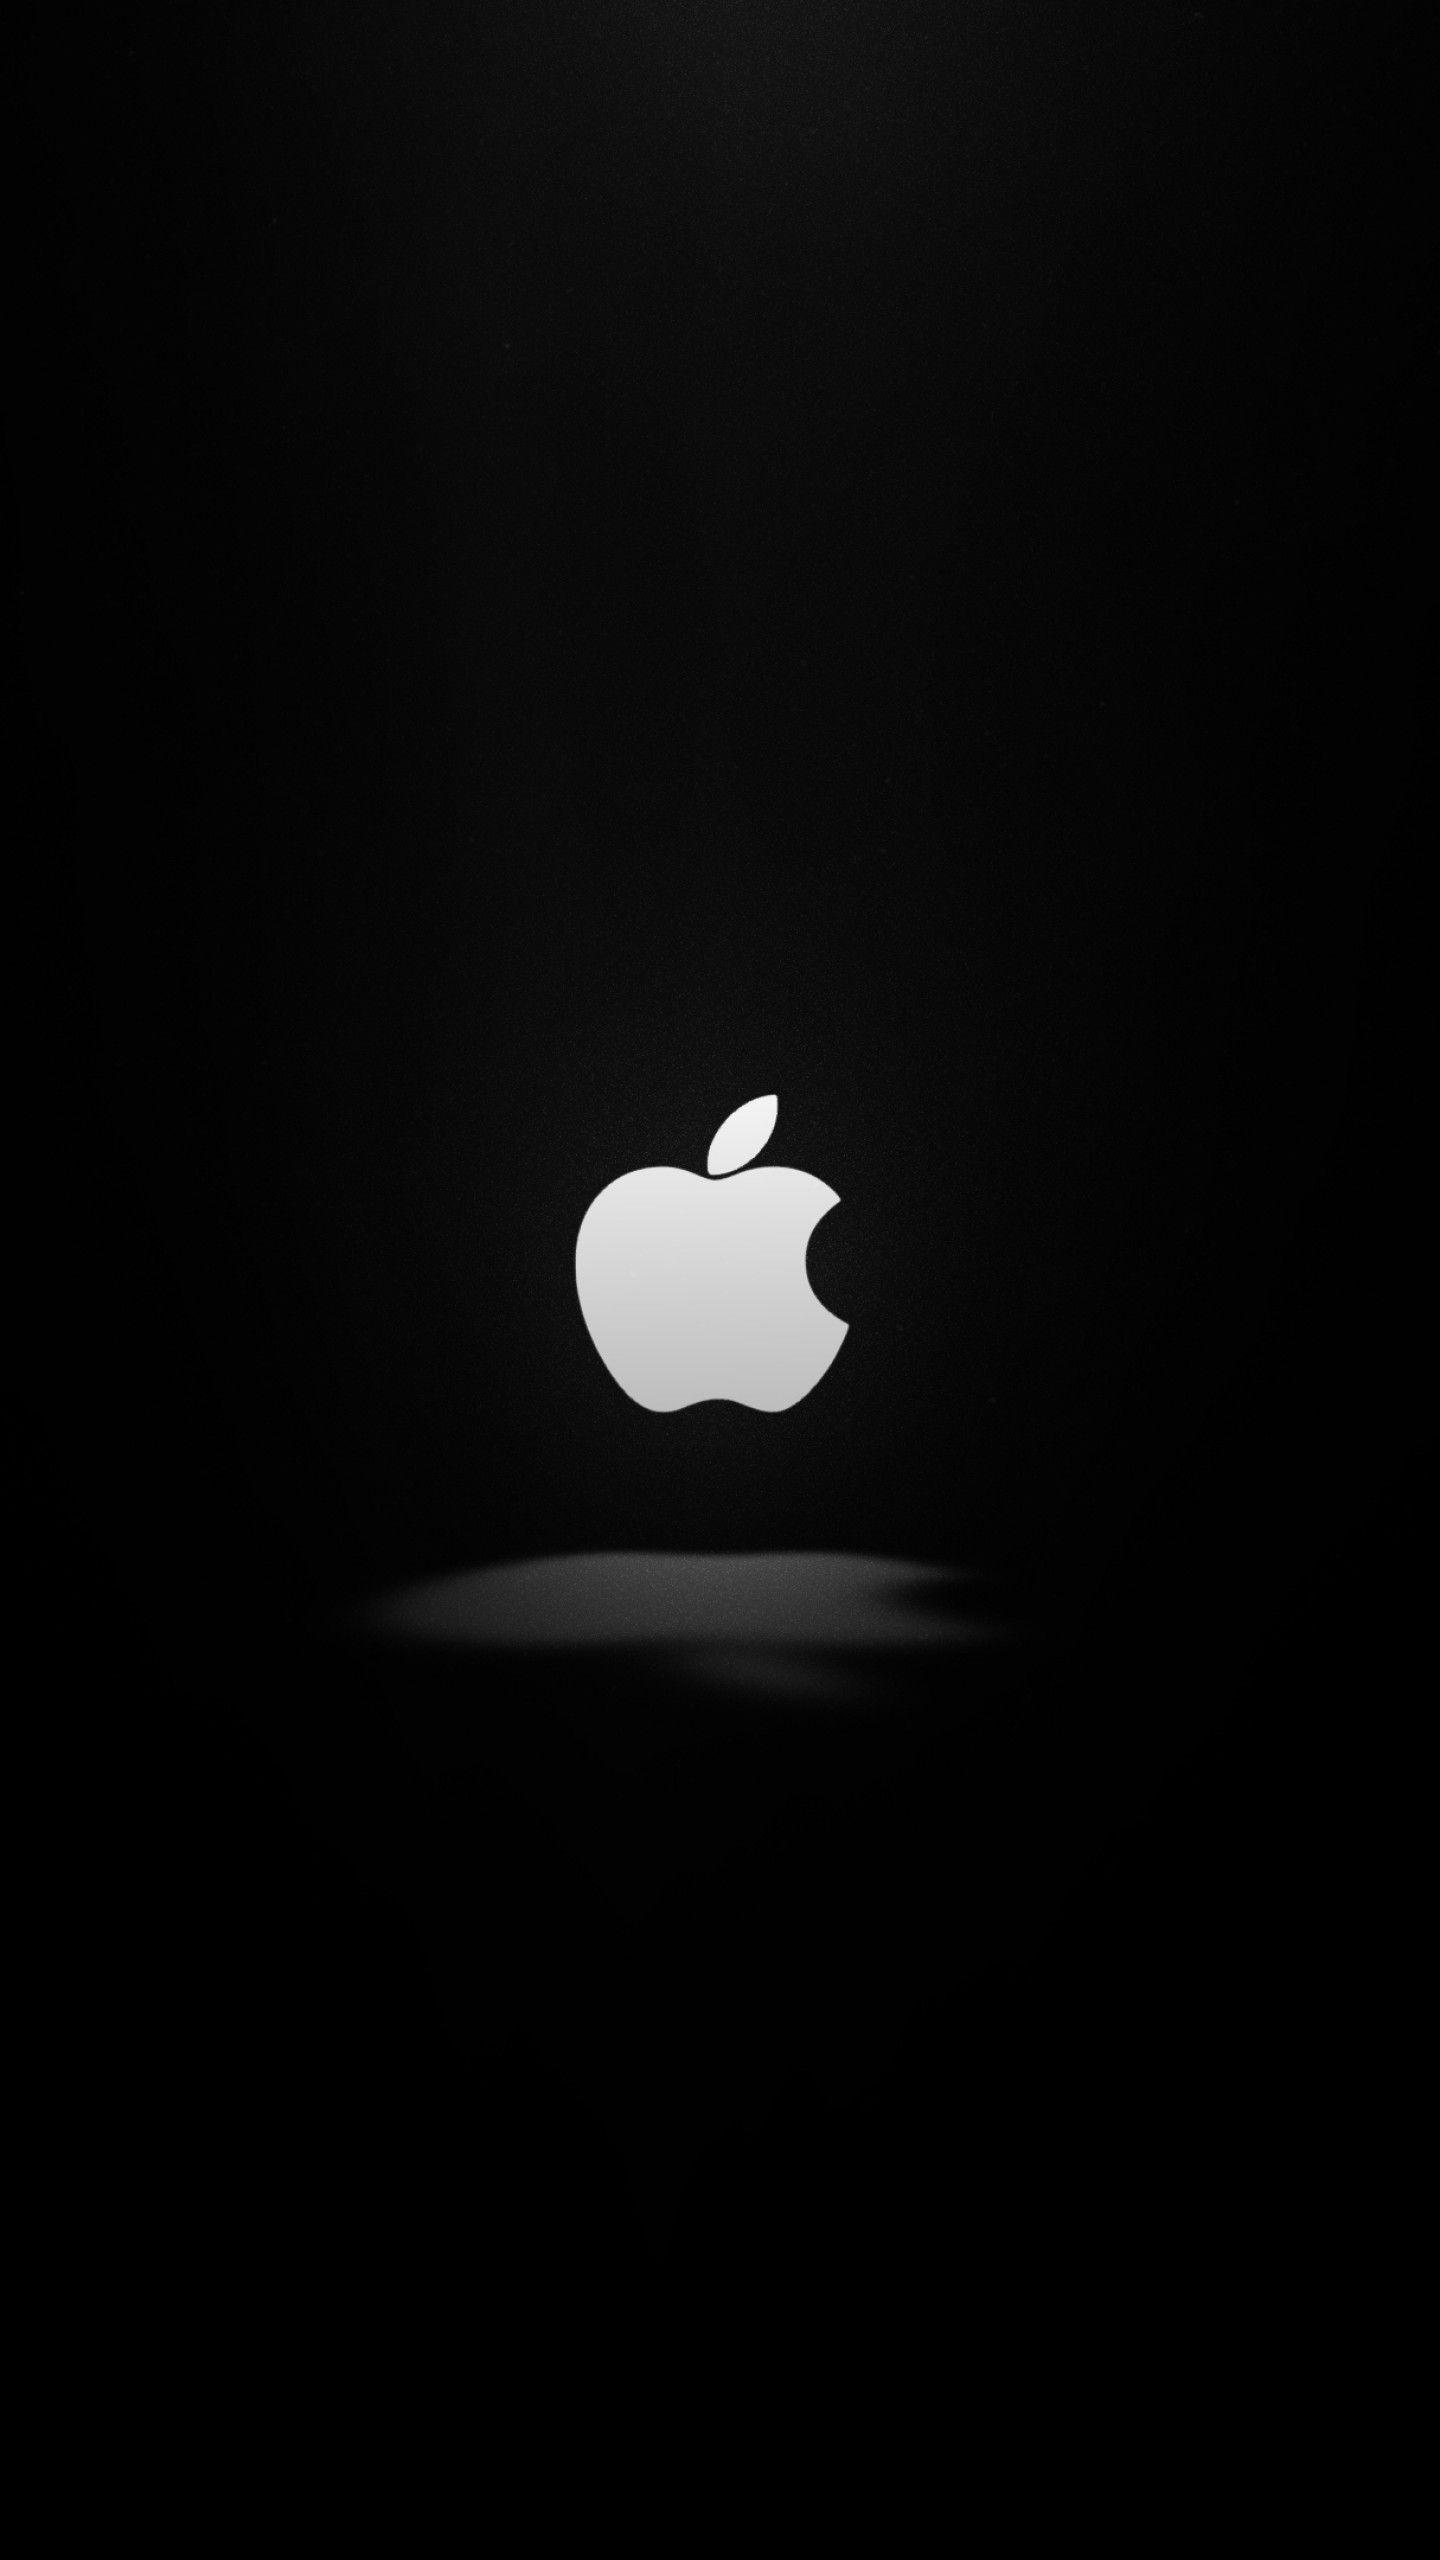 Apple Dark Wallpapers - Top Free Apple Dark Backgrounds - WallpaperAccess